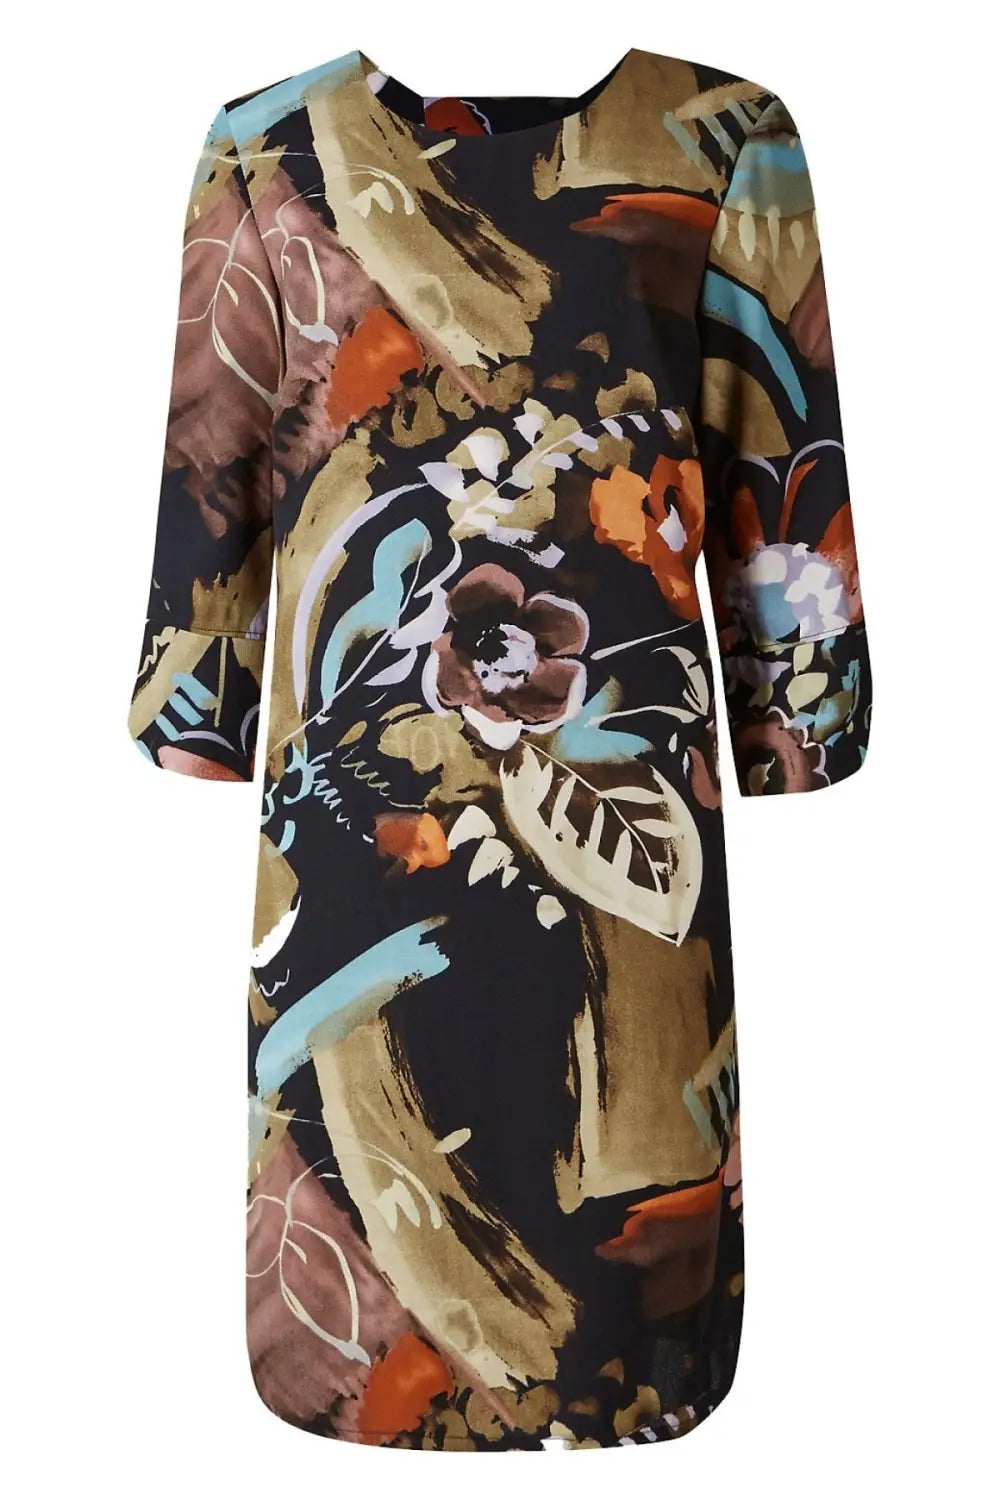 M&S Abstract Print Tunic Dress